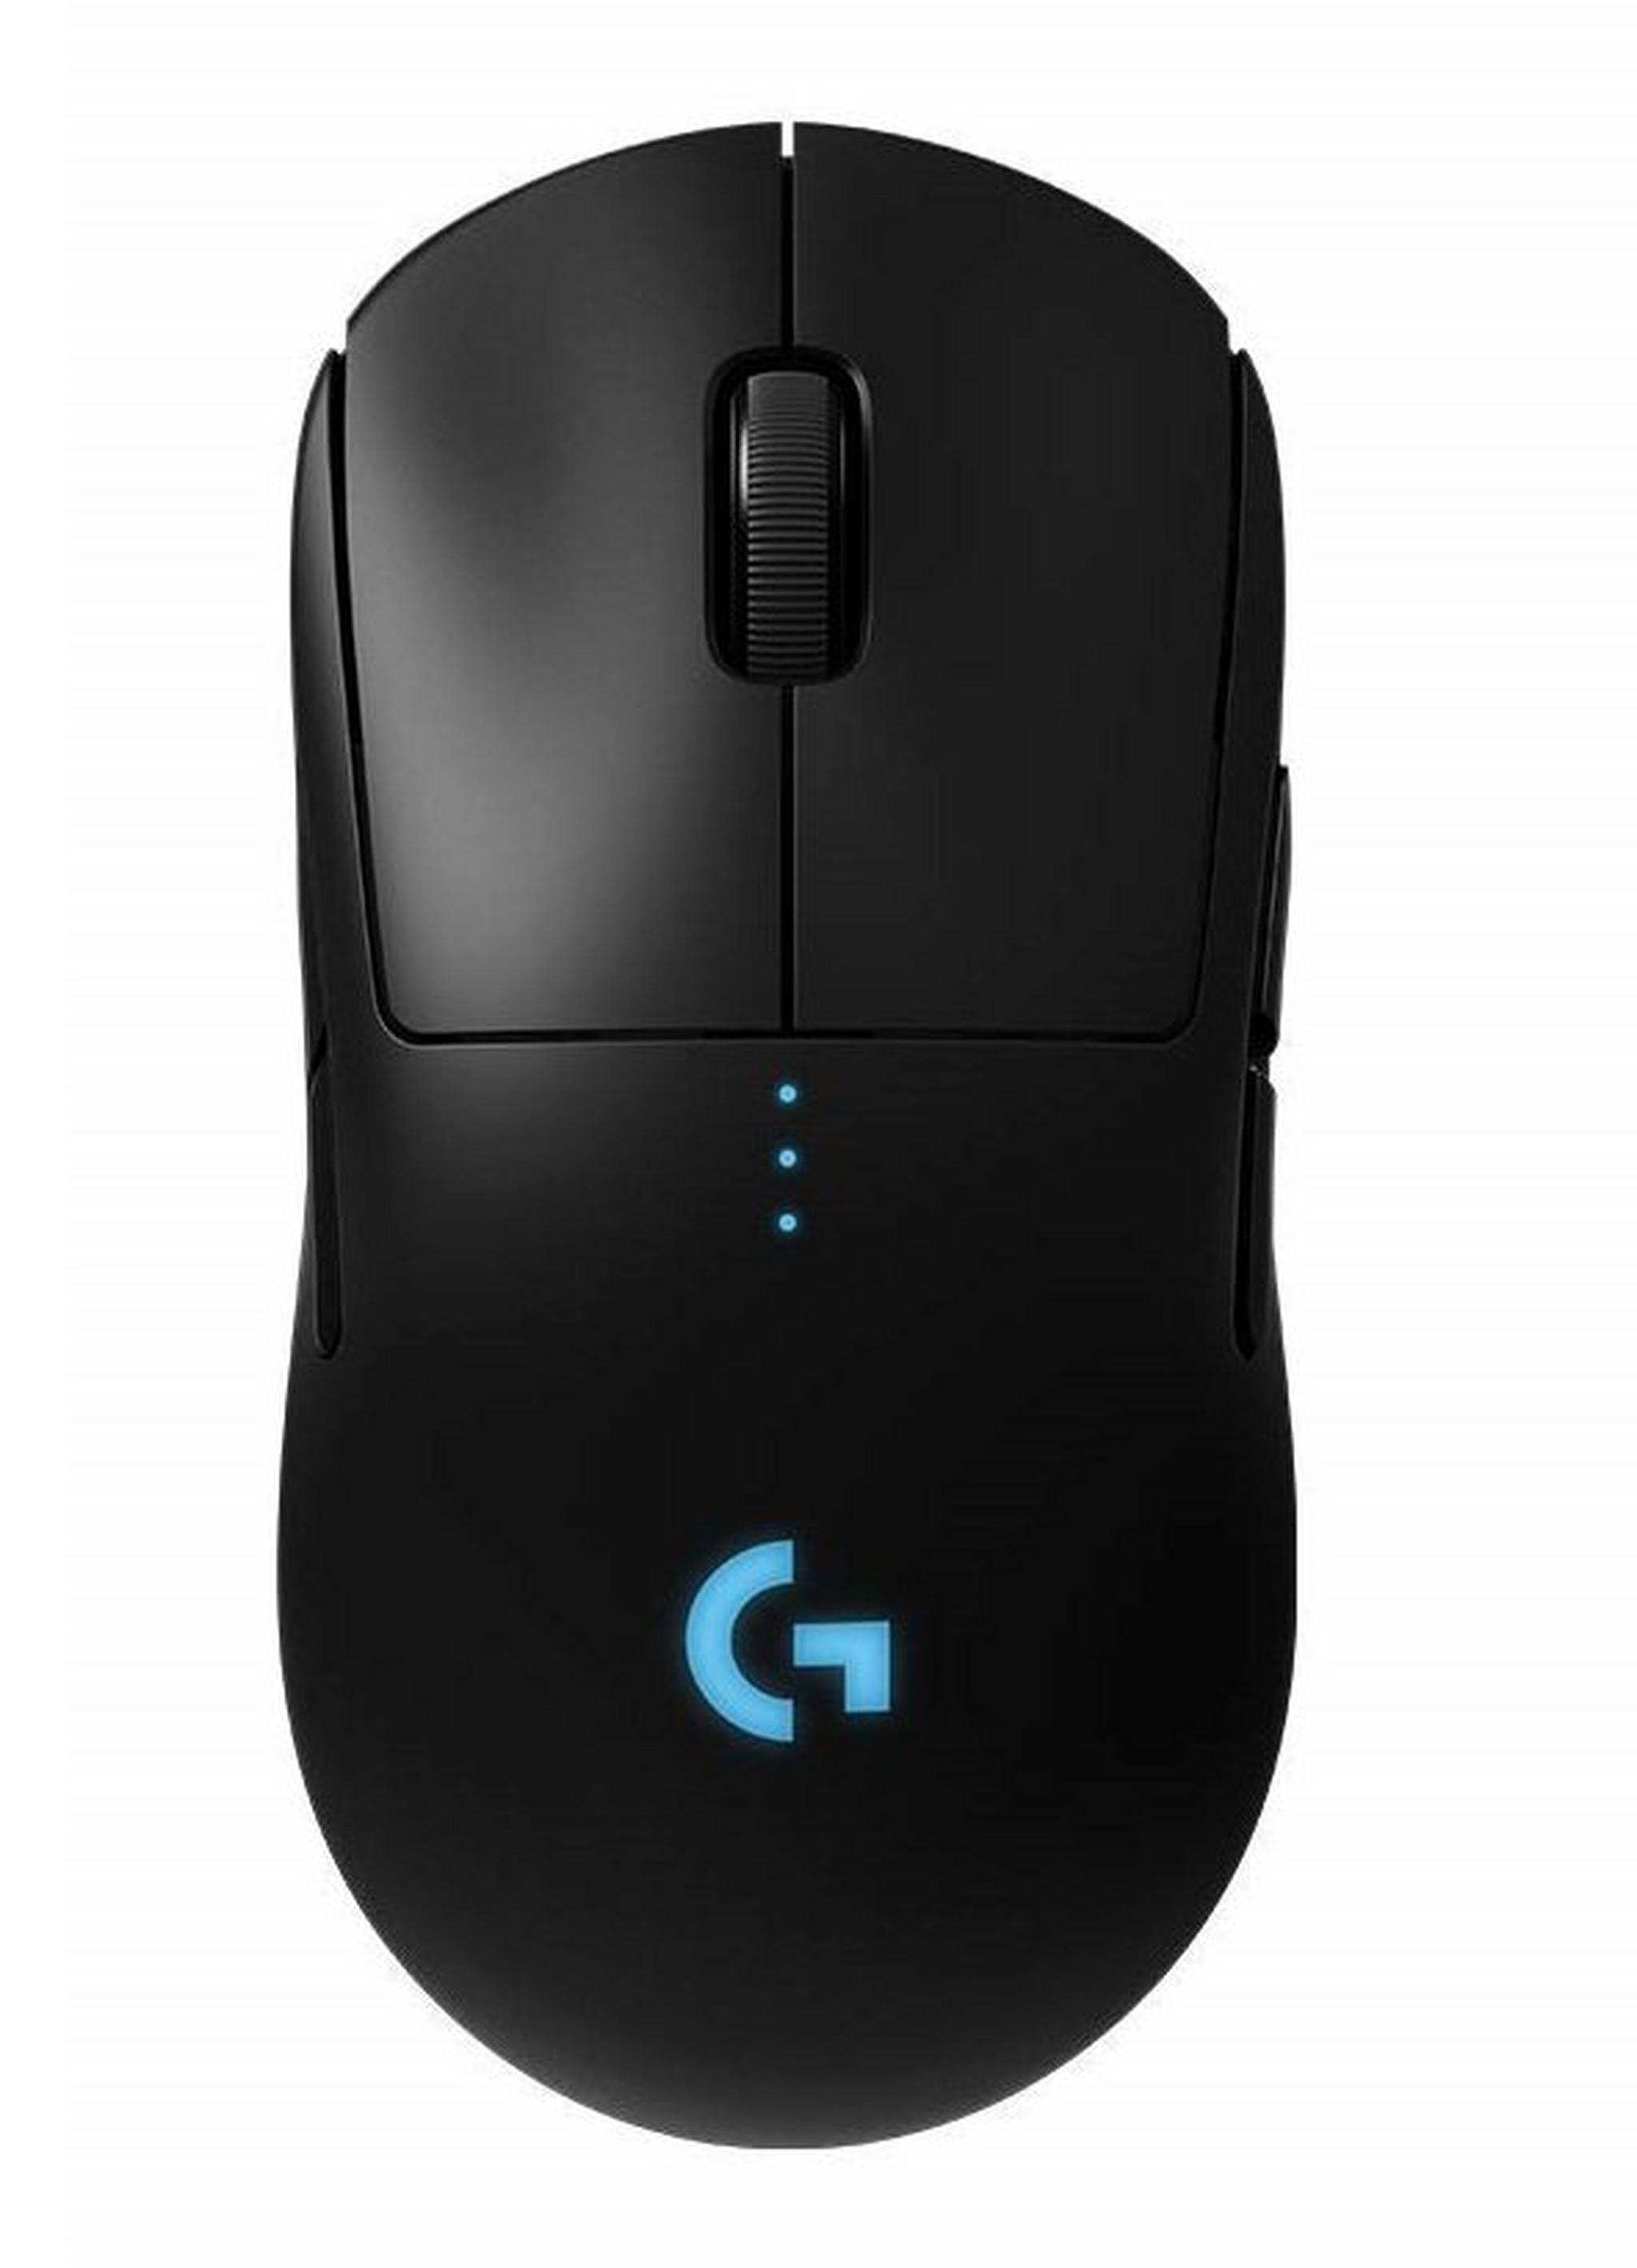 Logitech G Pro Wireless Gaming Mouse - Black